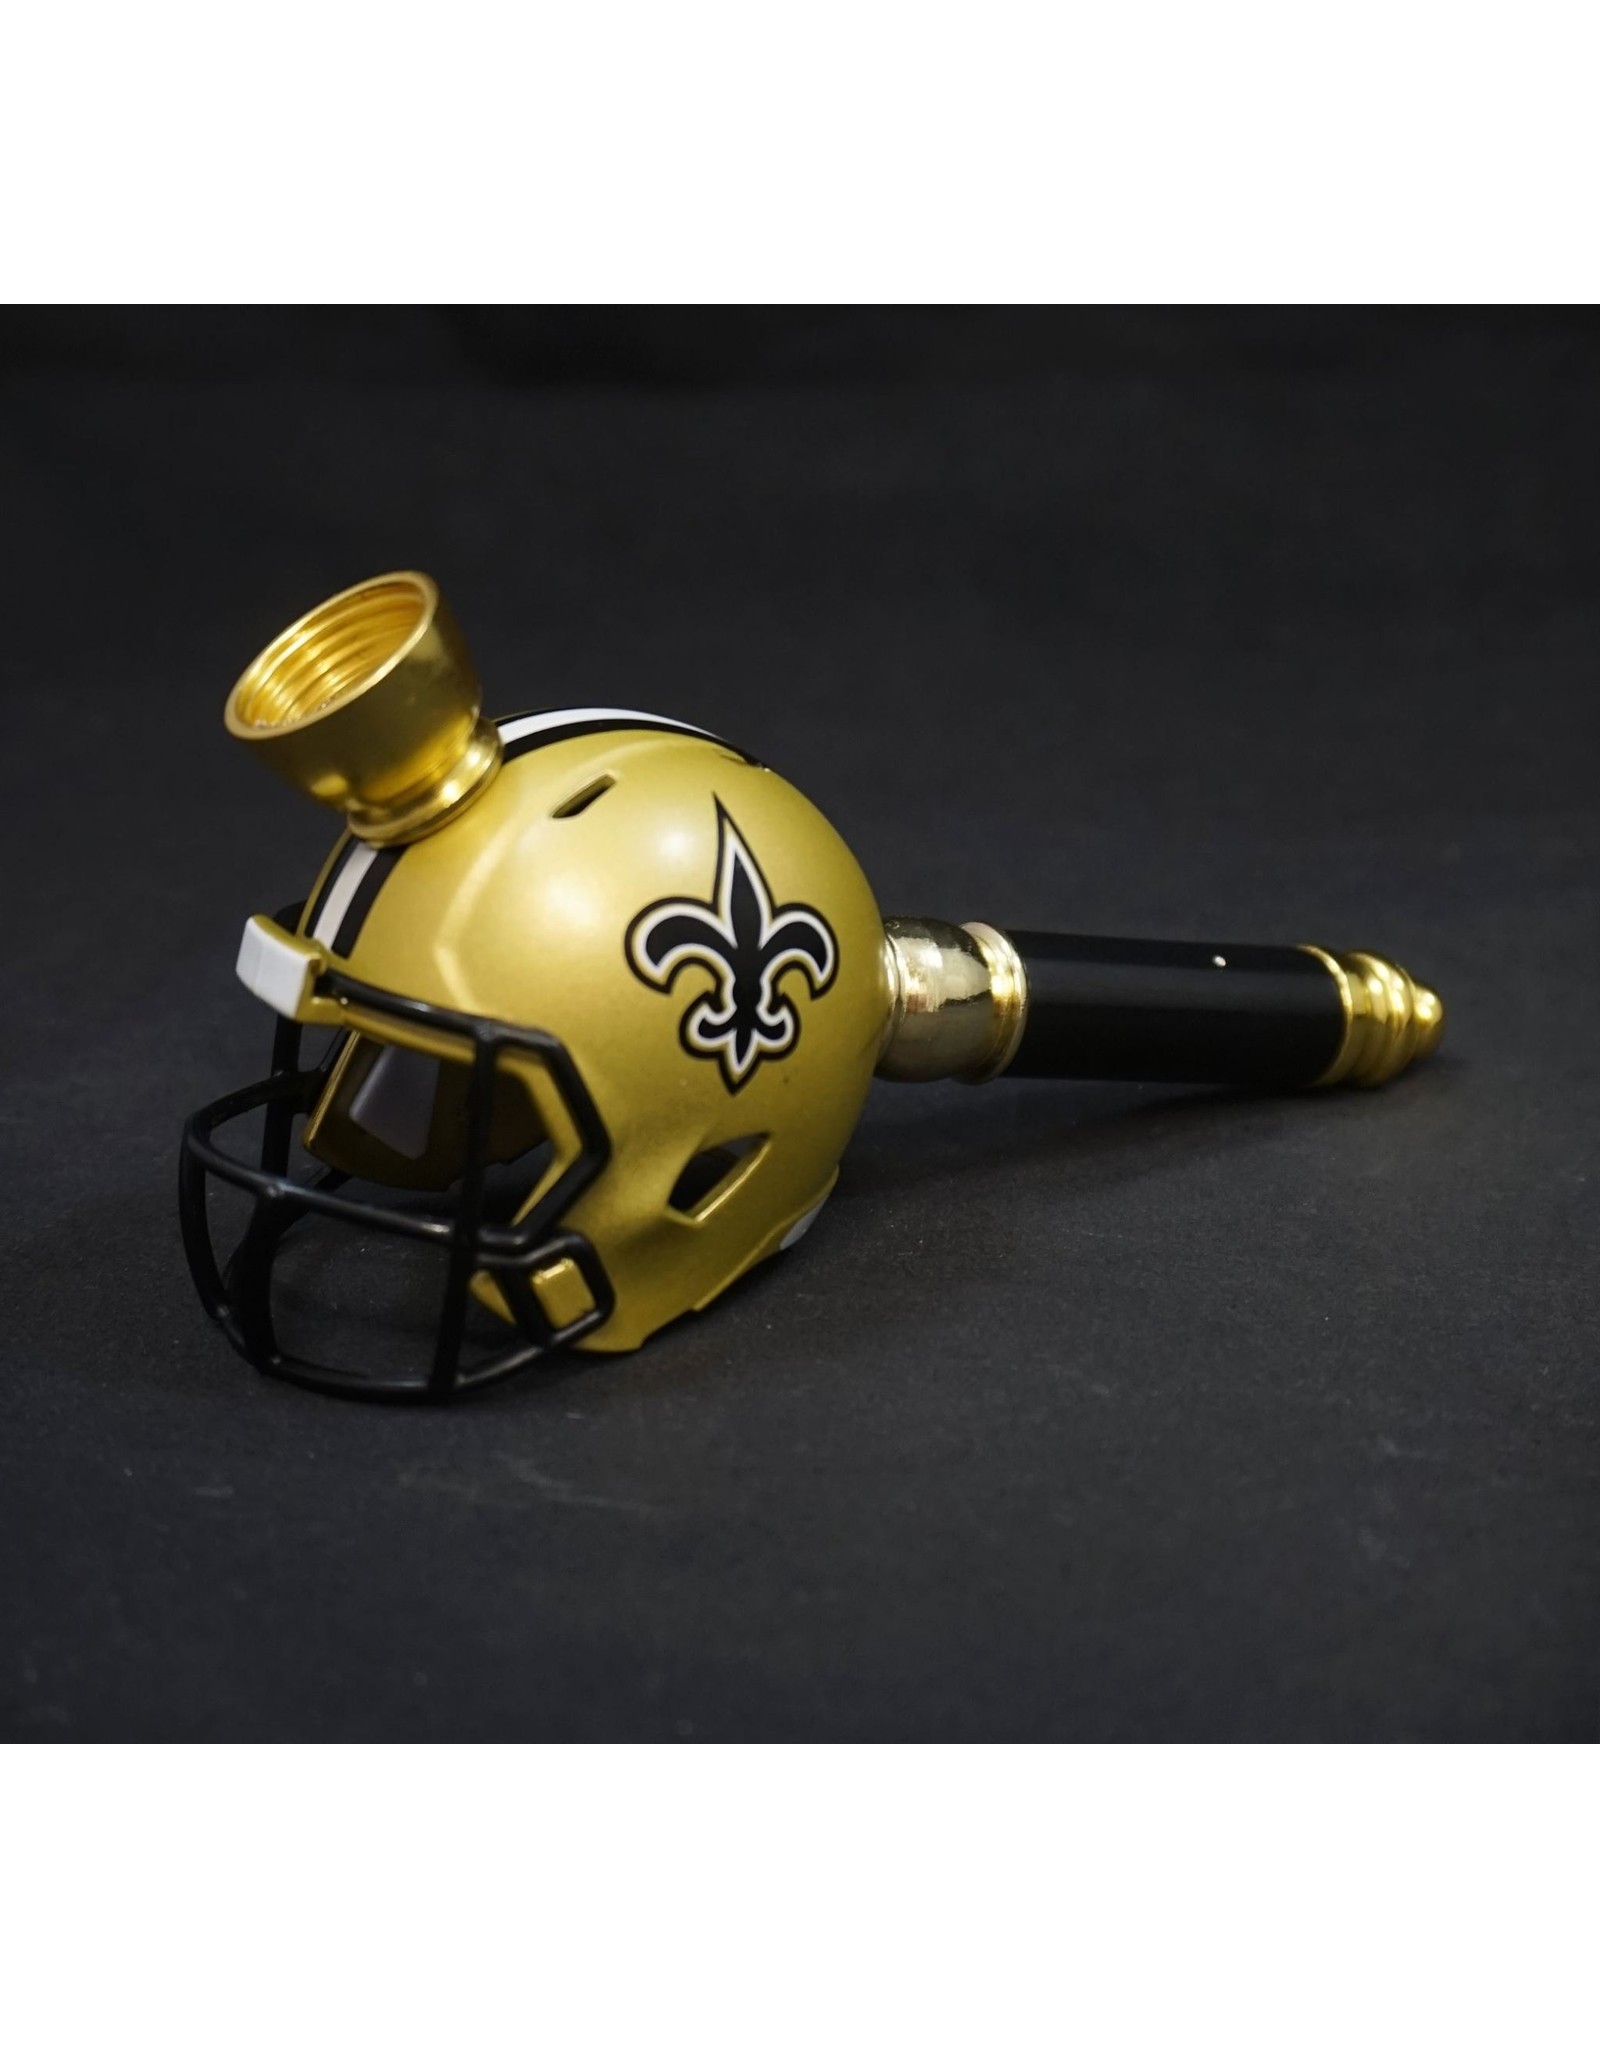 NFL Metal Handpipe - New Orleans Saints